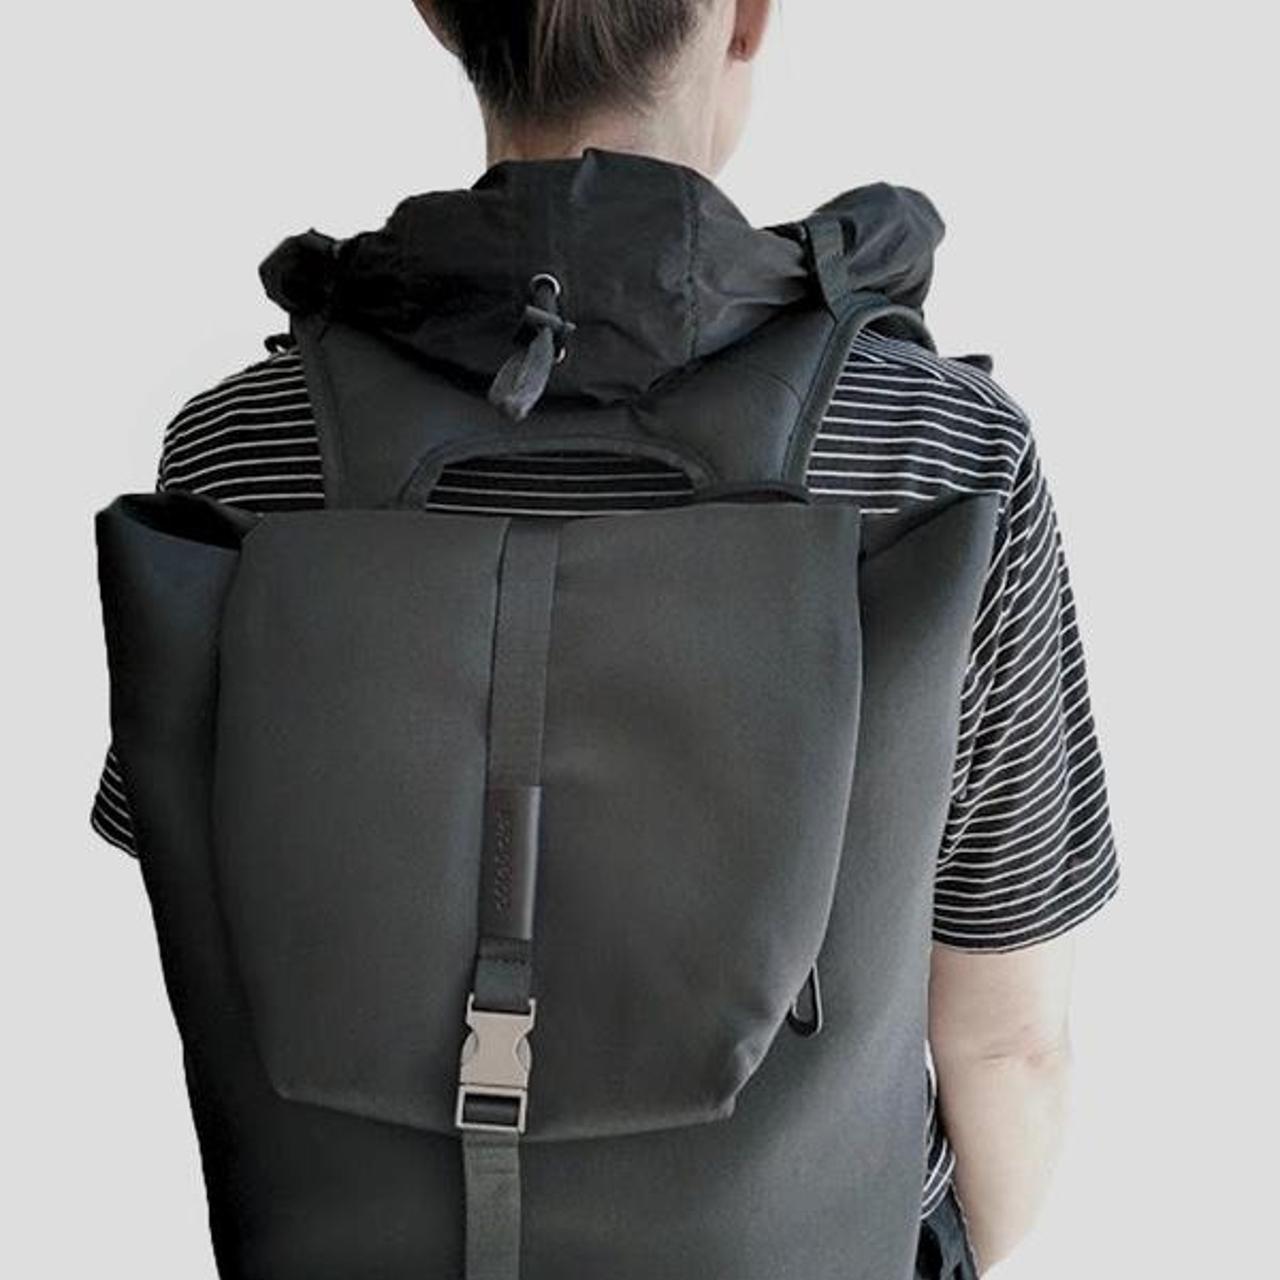 Product Image 2 - Cote&Ciel Hooded Ecoyarn Backpack
Rucksack

Used once